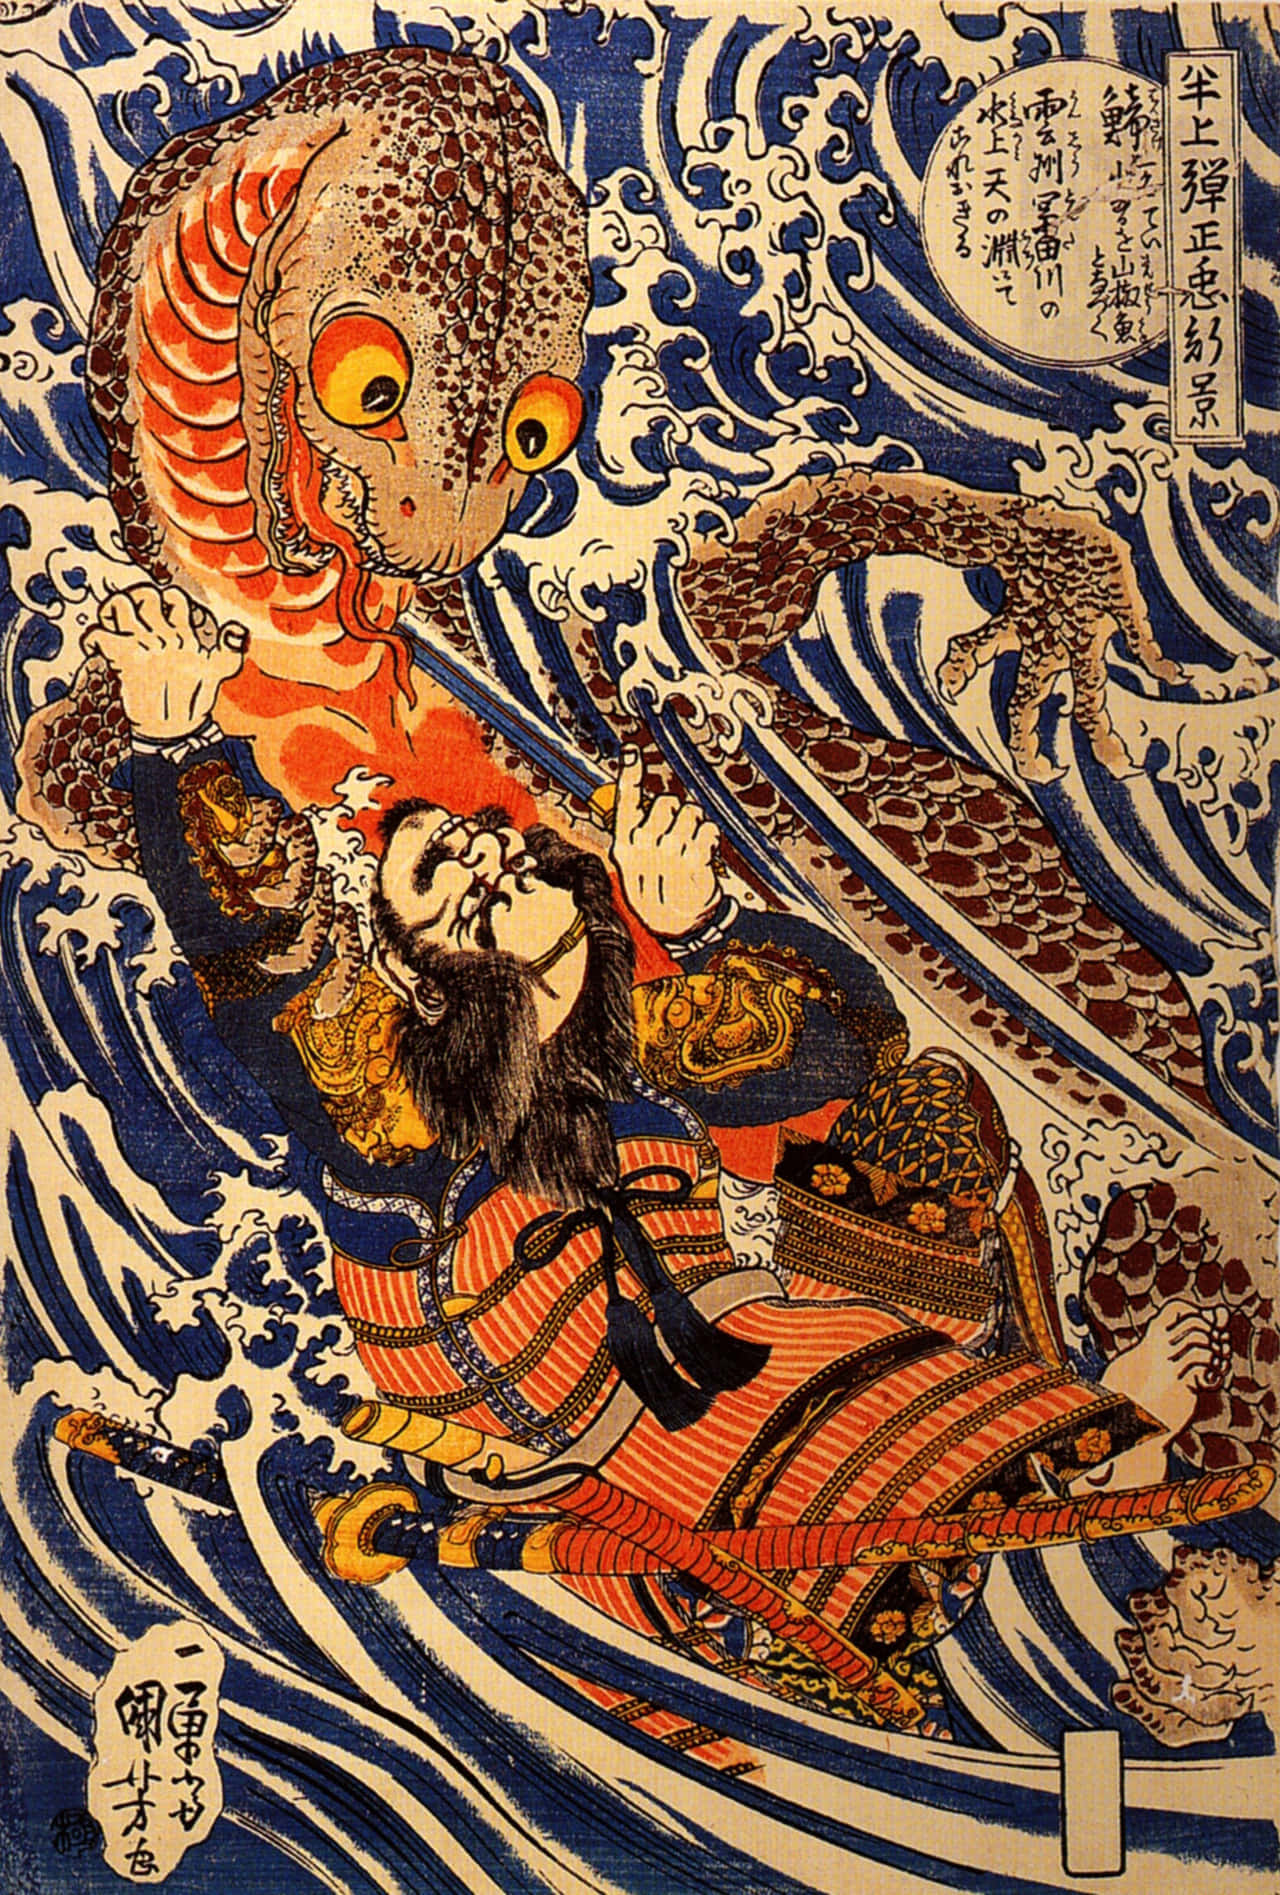 "A Traditional Japanese Artwork" Wallpaper